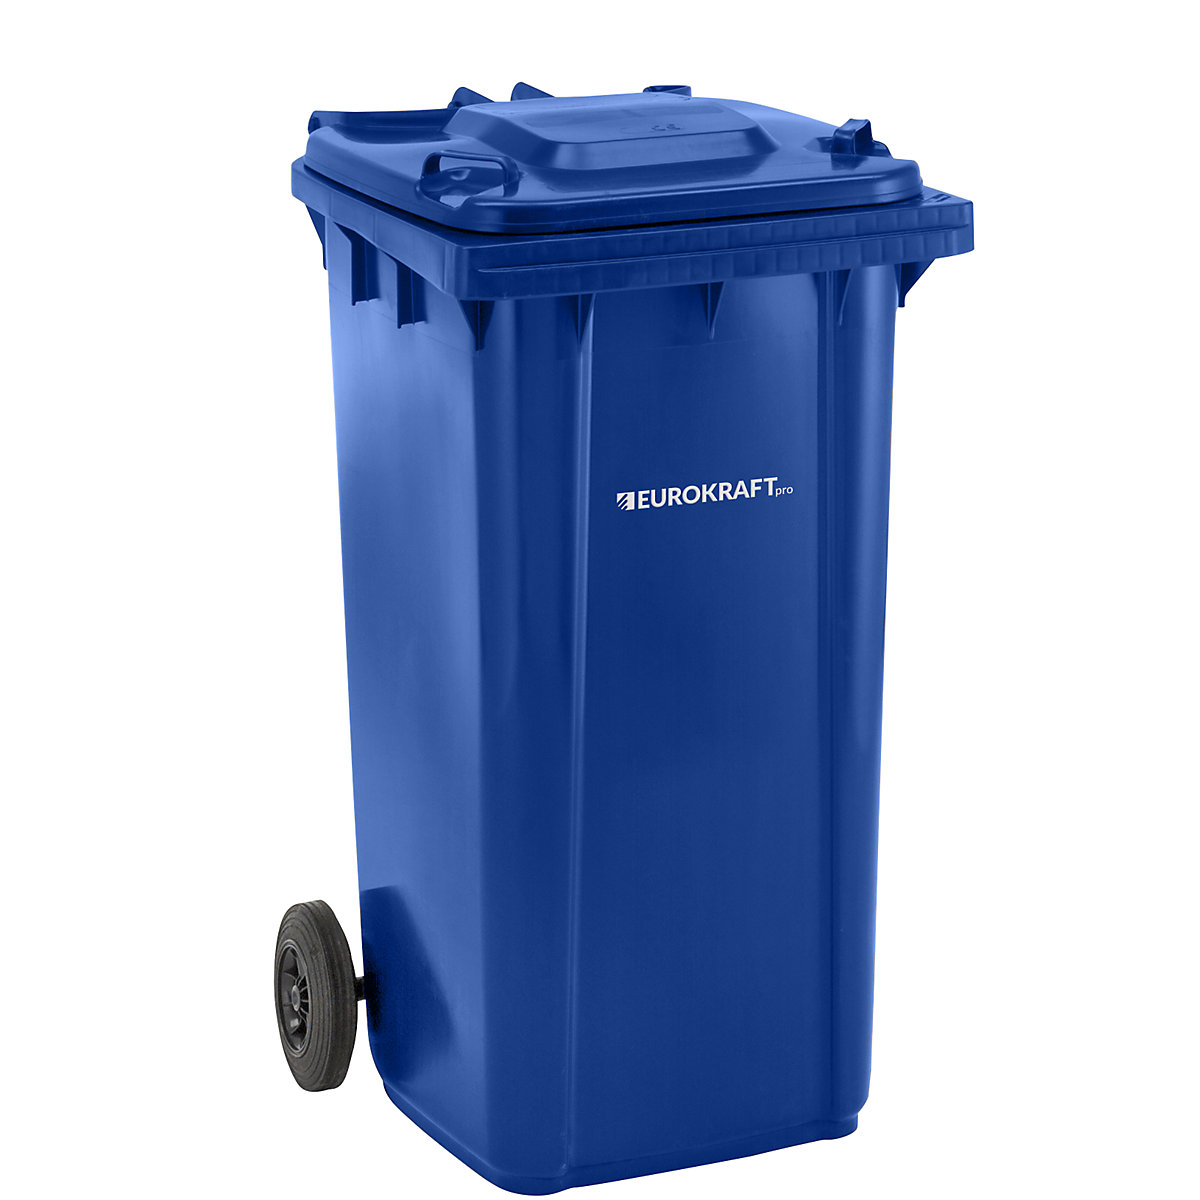 Kanta za smeće od plastike DIN EN 840 – eurokraft pro, volumen 240 l, ŠxVxD 580 x 1100 x 740 mm, u plavoj boji-6